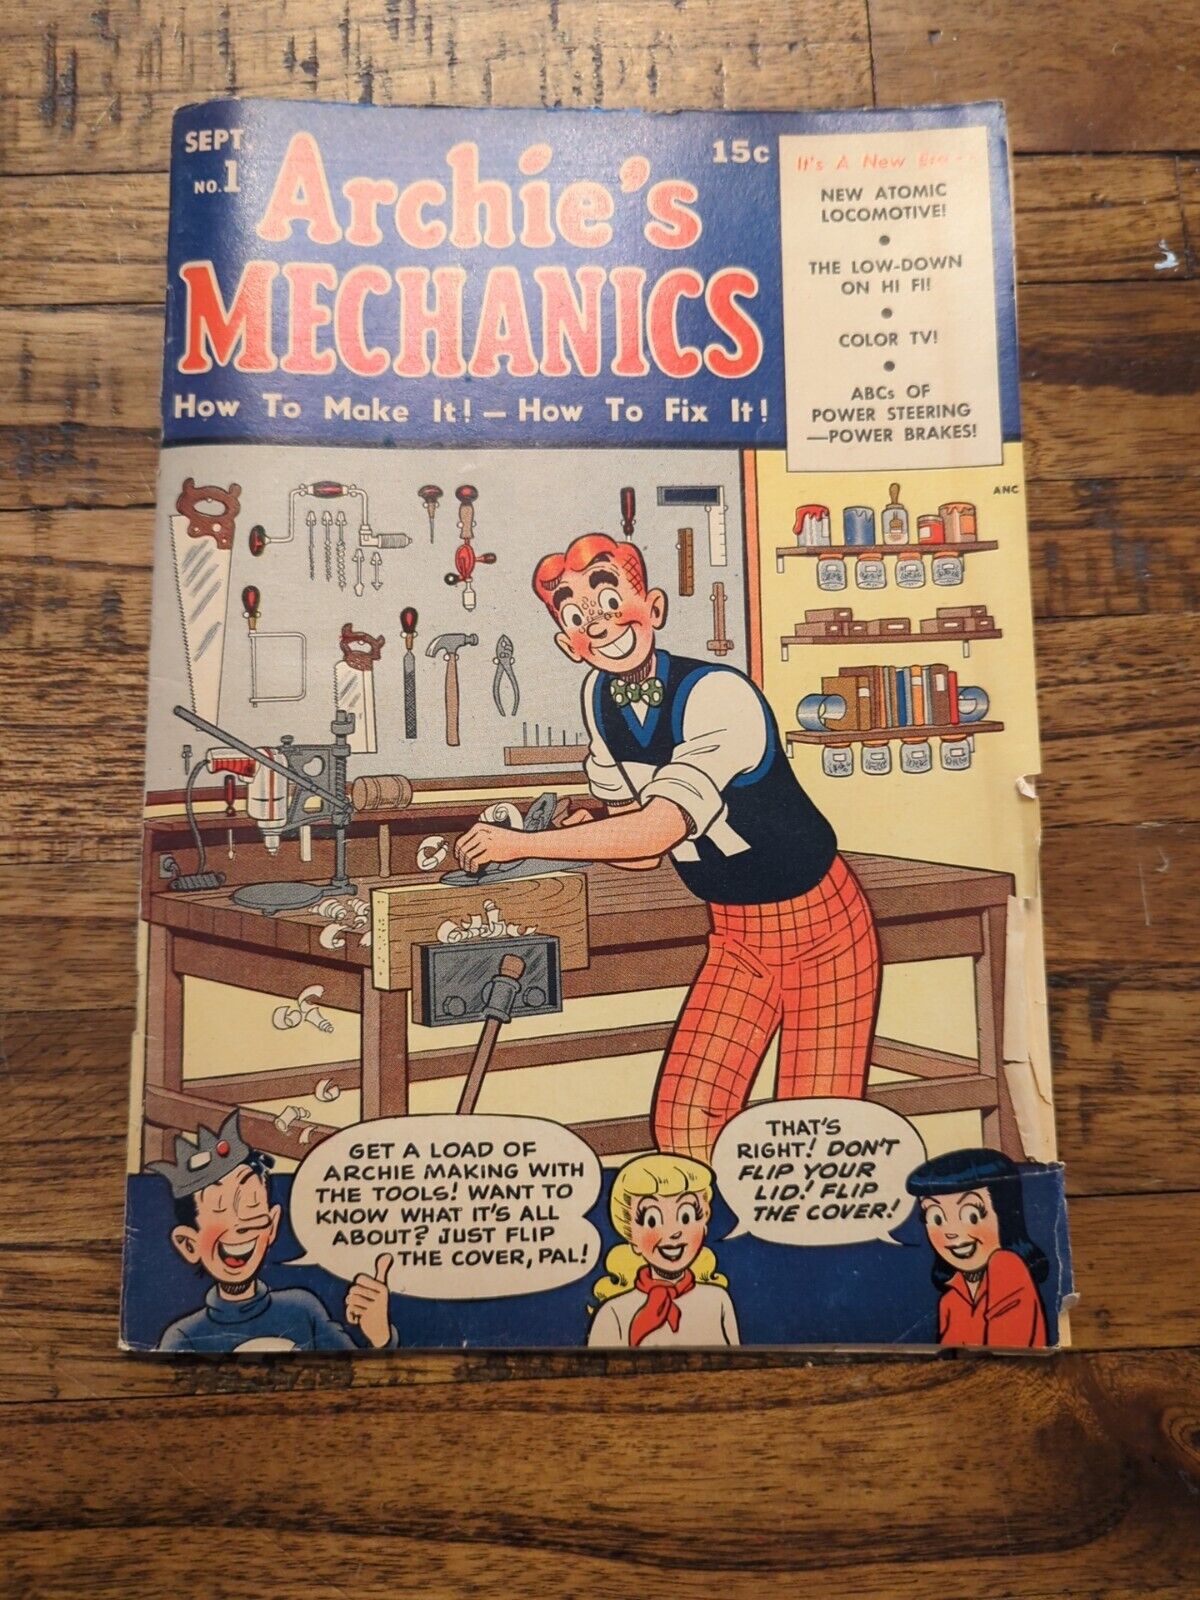 SEPTEMBER 1954 ARCHIE'S MECHANICS VOL. 1 NO. 1 COMIC BOOK - ARCHIE COMICS